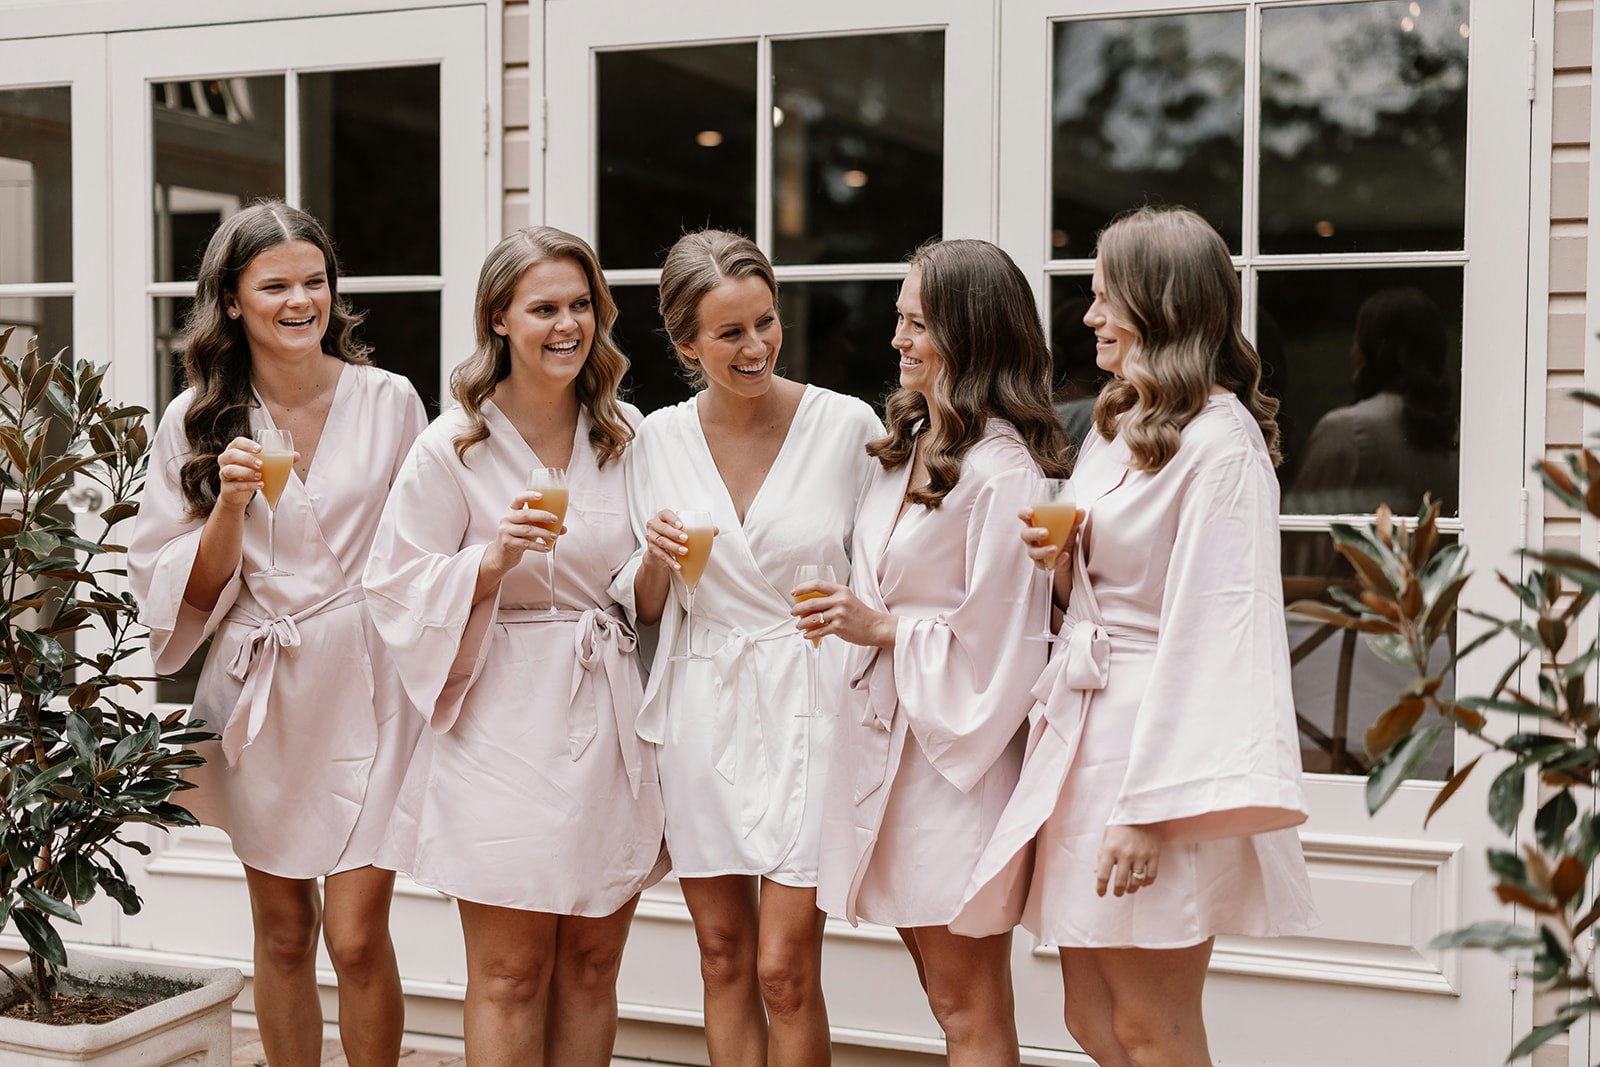 Bride and bridesmaids drinking orange juice